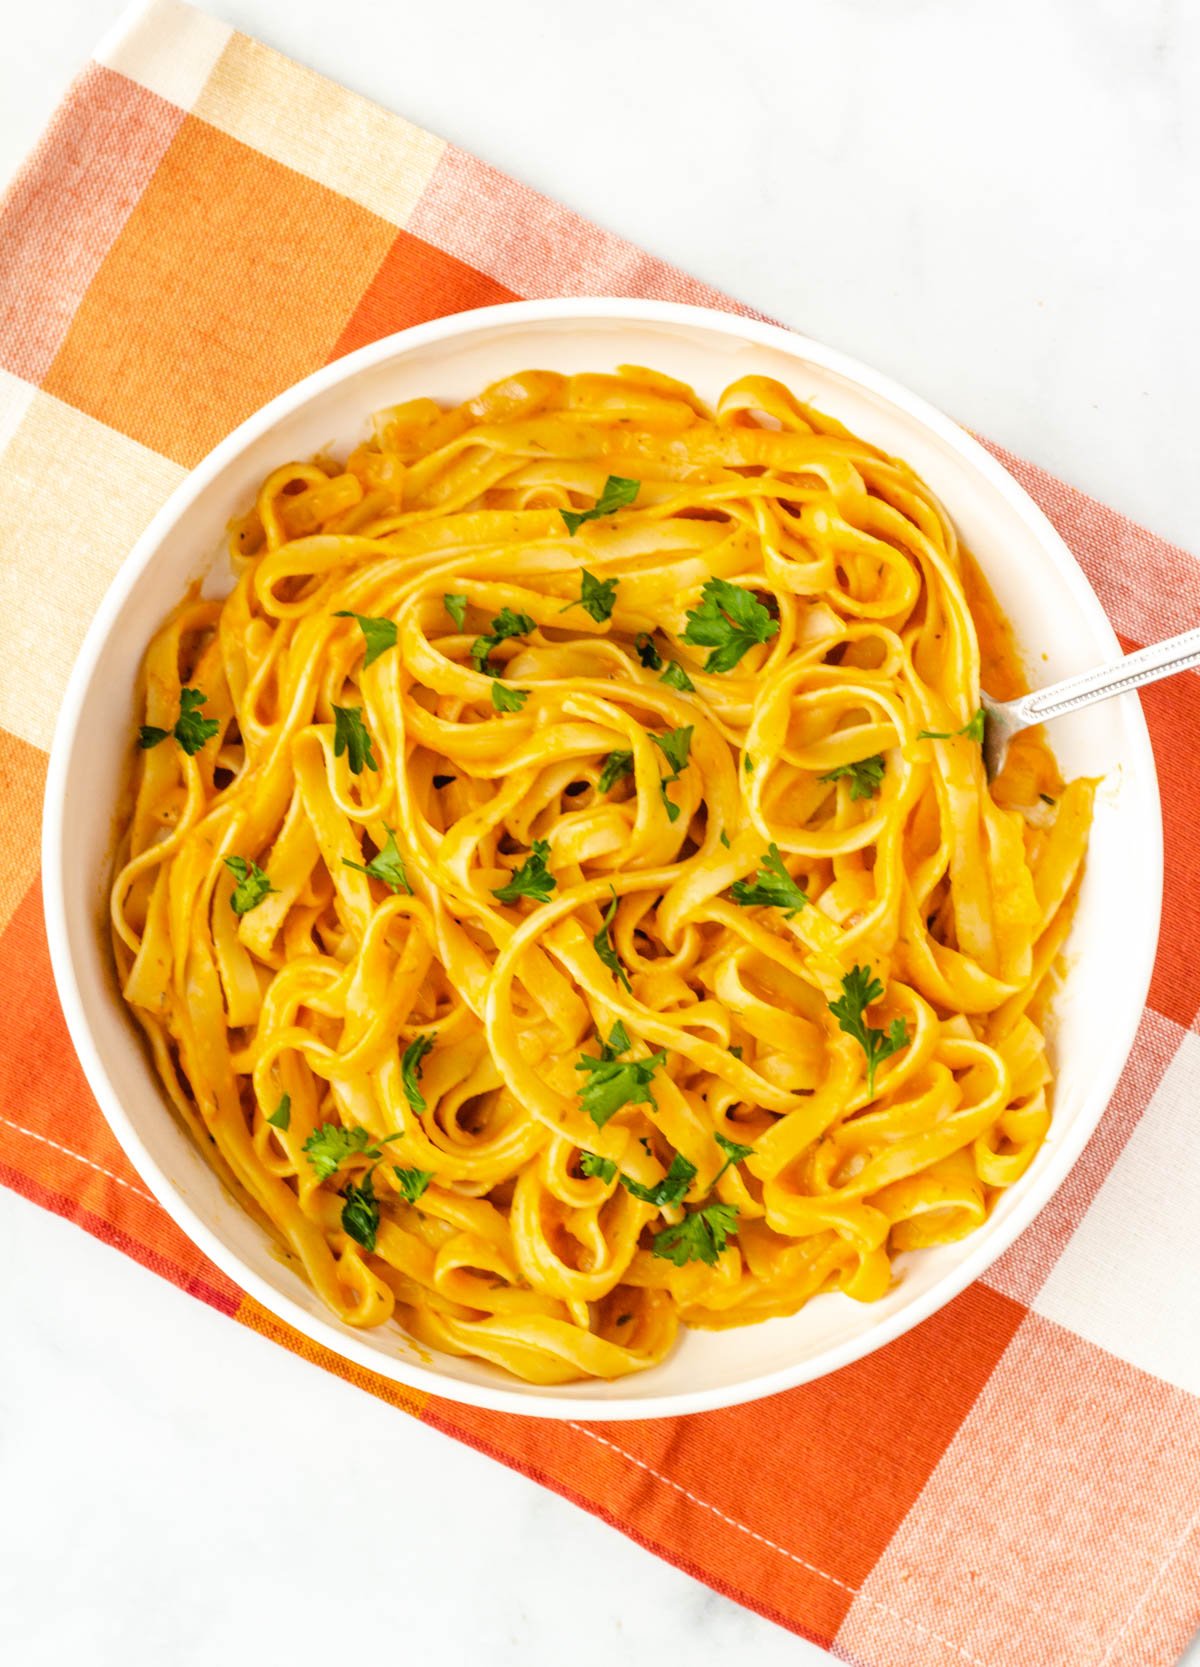 veganuary recipes: vegan pumpkin pasta in white bowl